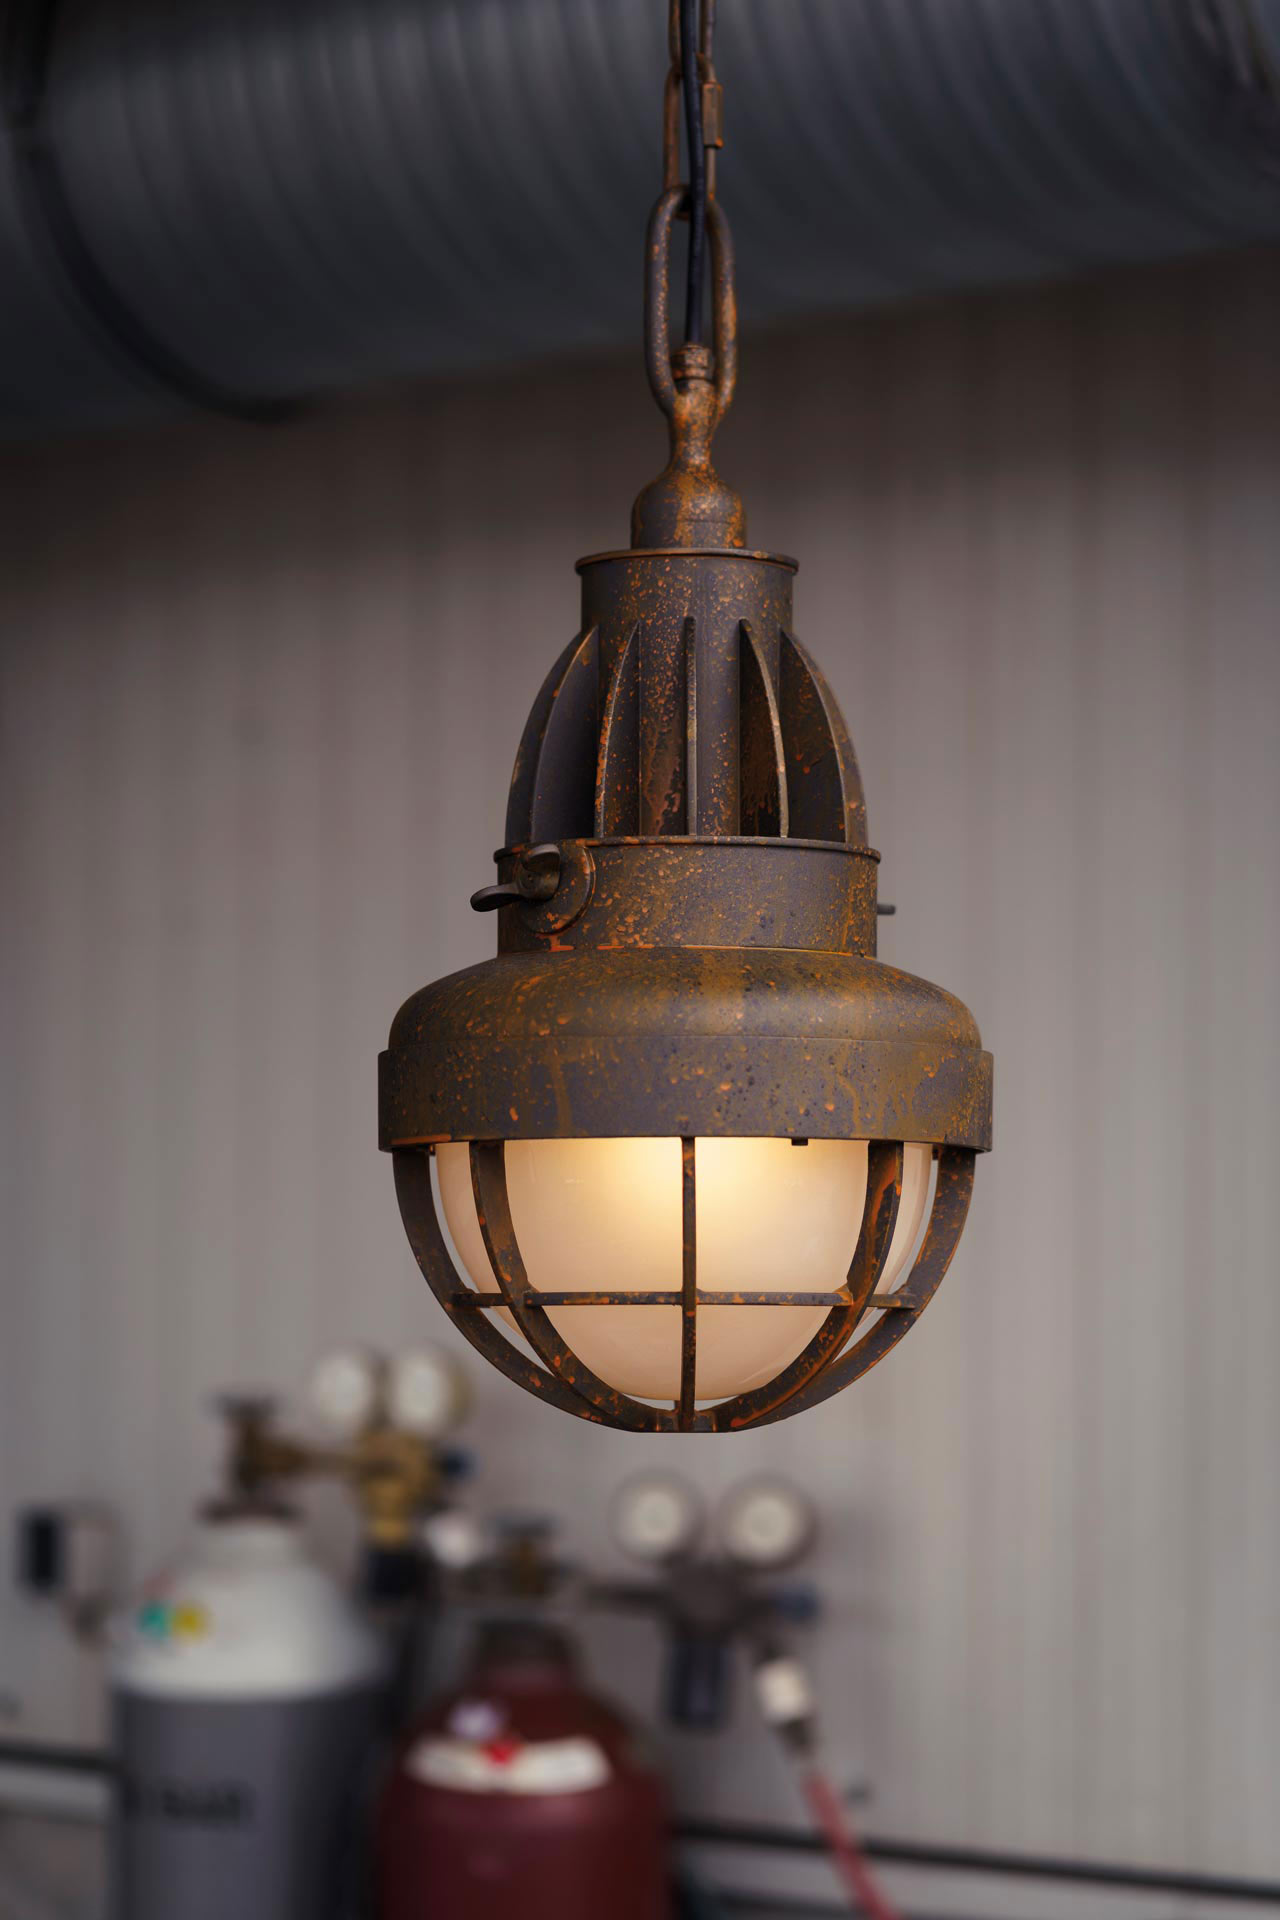 Ceiling Pendant Lamp Light Factory Fixture Steampunk Explosion Big Industrial 